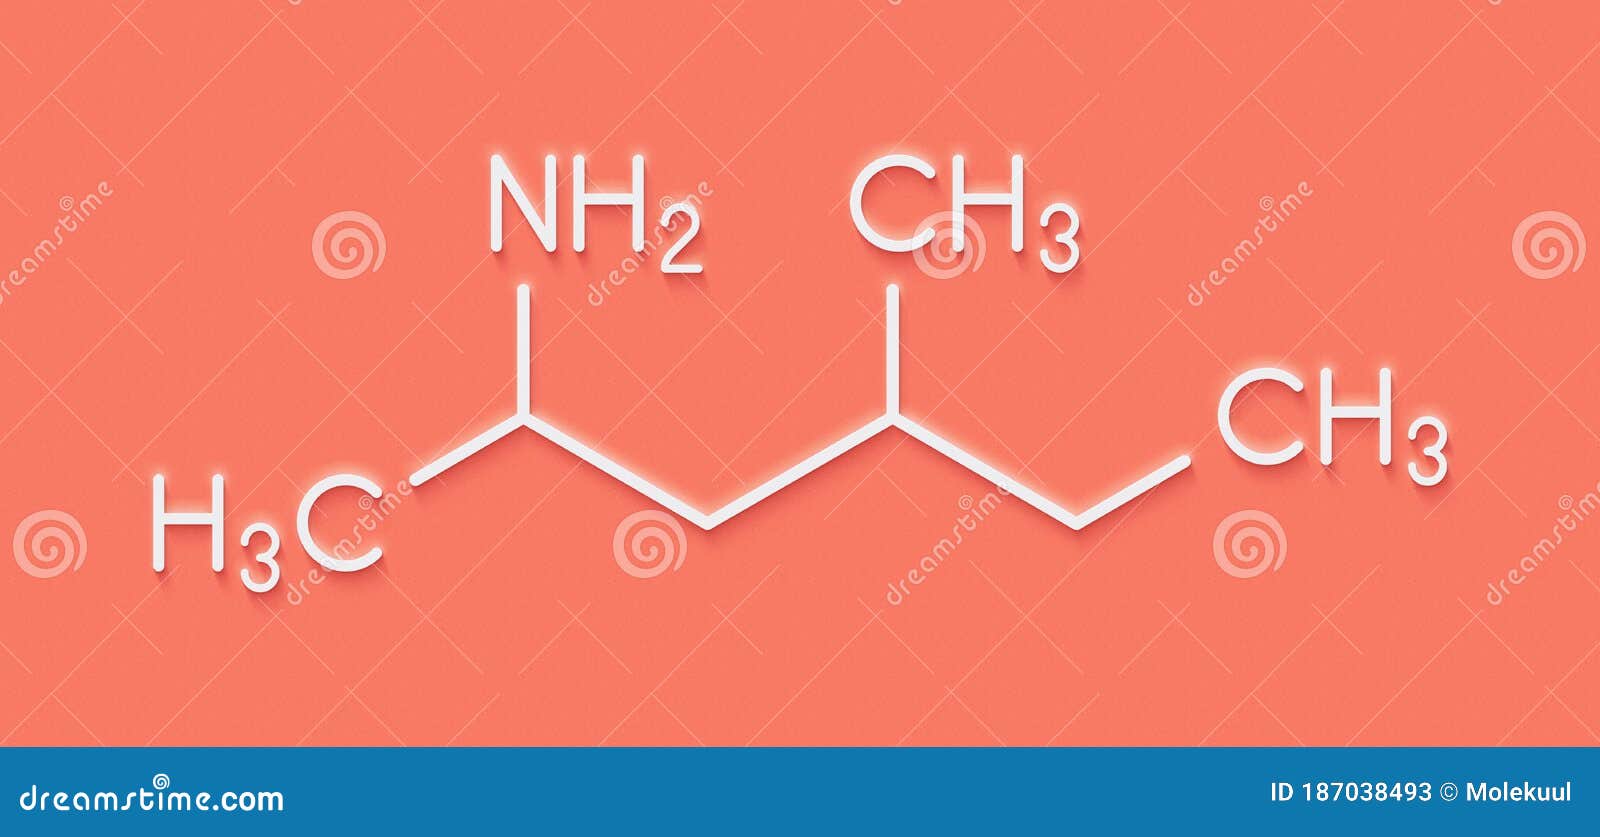 methylhexanamine dimethylamylamine, dmaa stimulant molecule. skeletal formula.